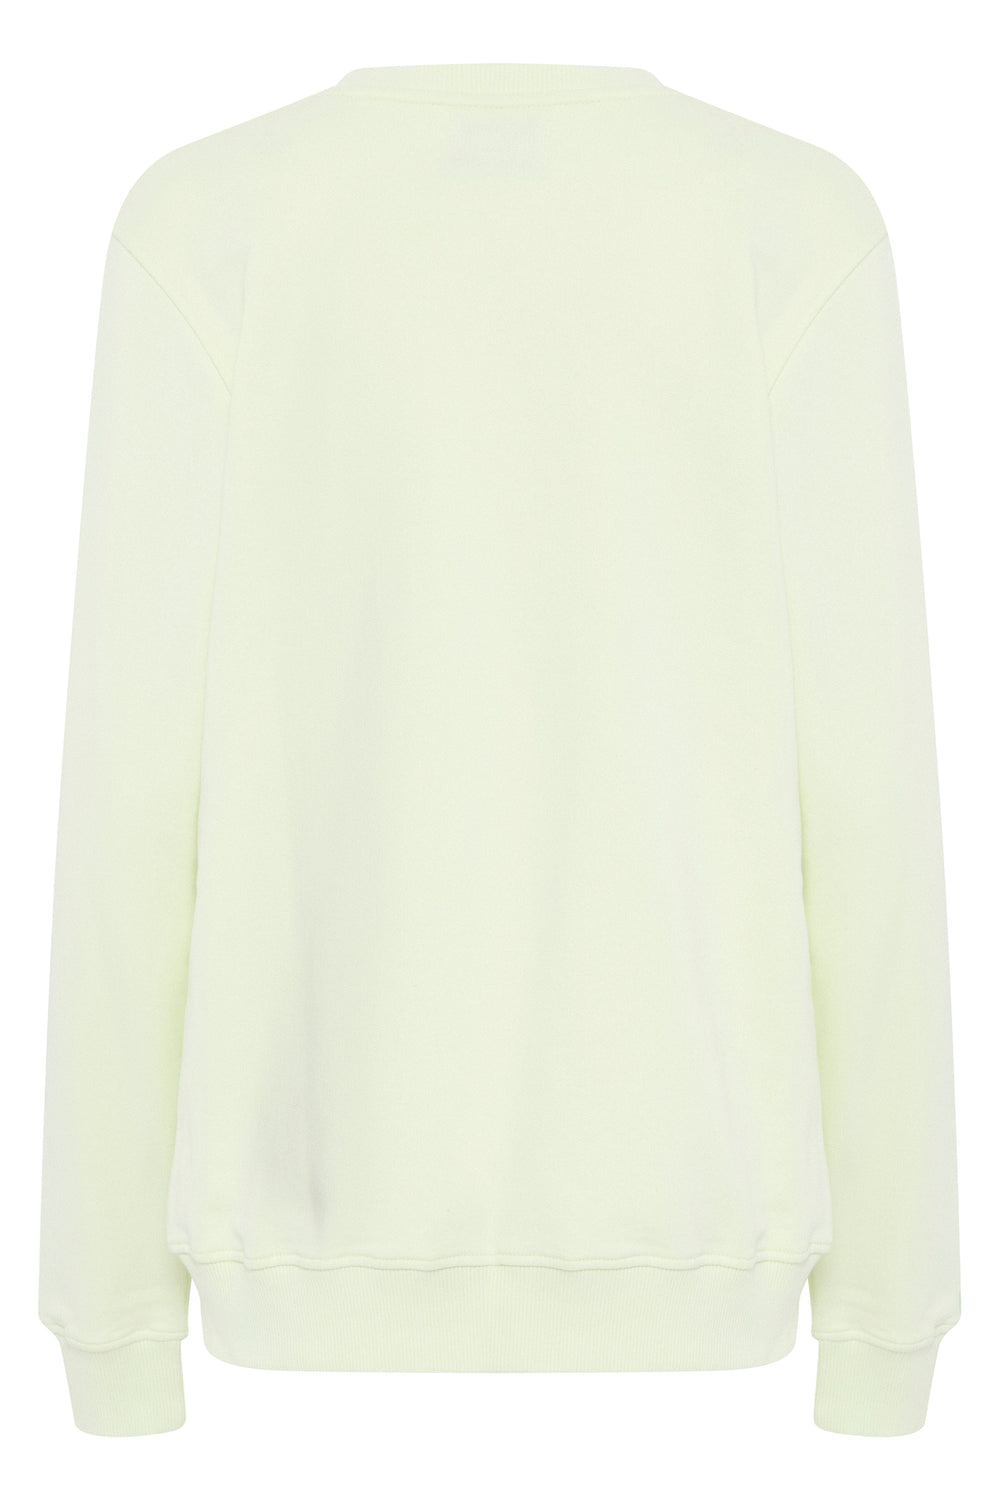 Ball - R. Aloma Sweatshirt - 204228 Lemon Curd Sweatshirts 